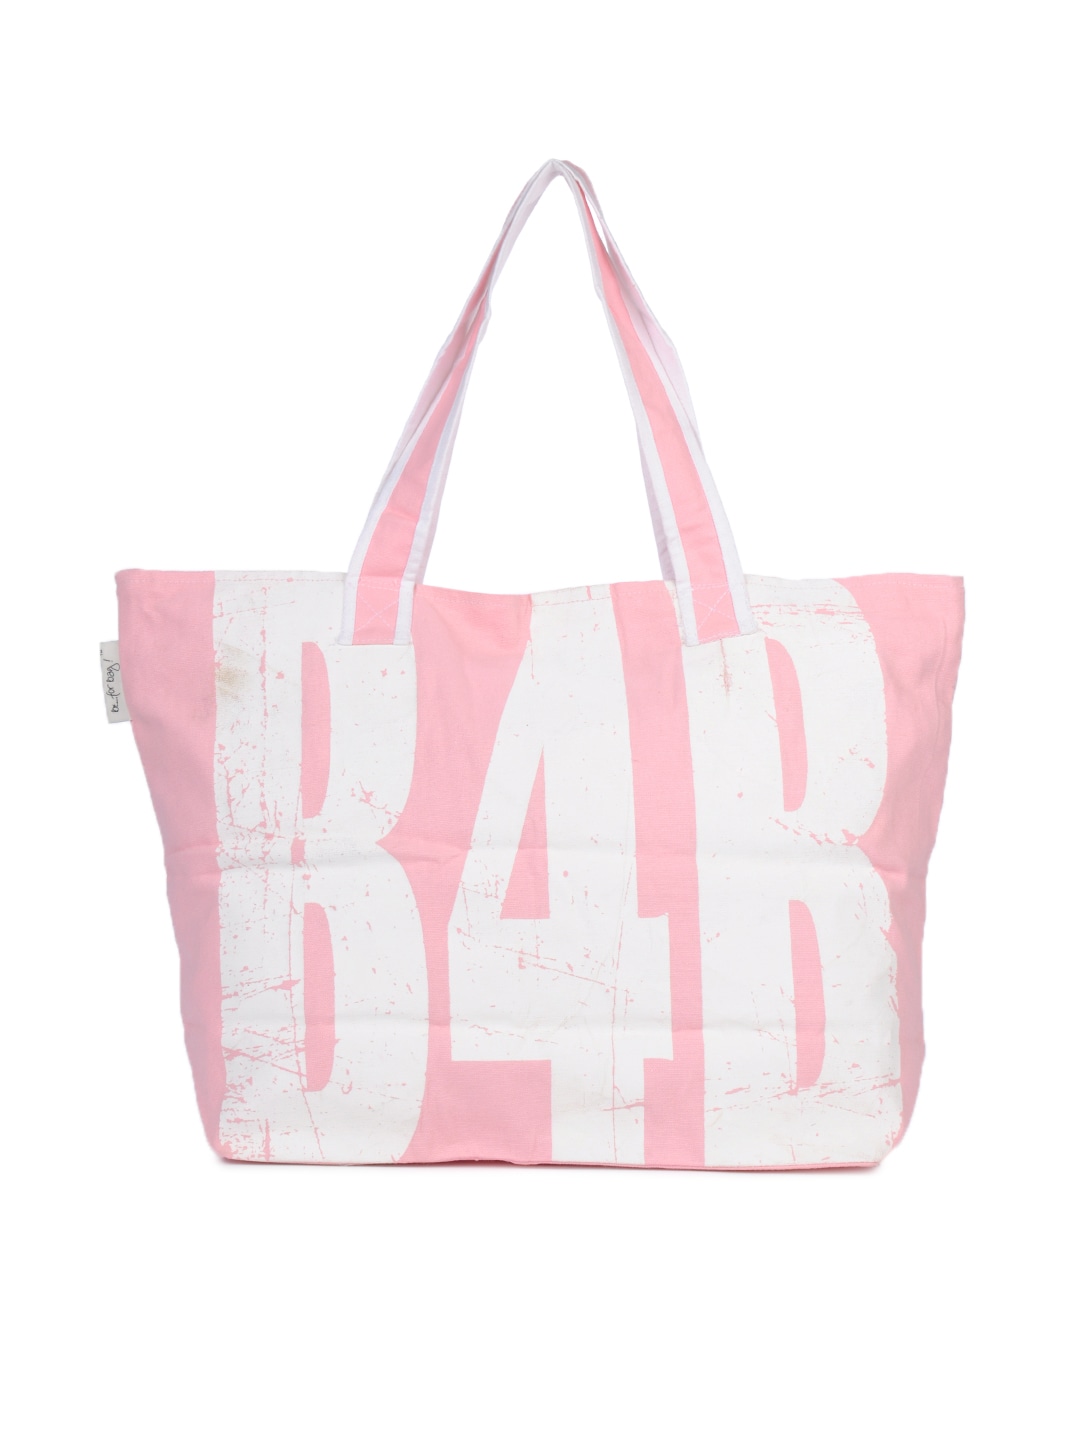 Be For Bag Women Pink Tote Bag